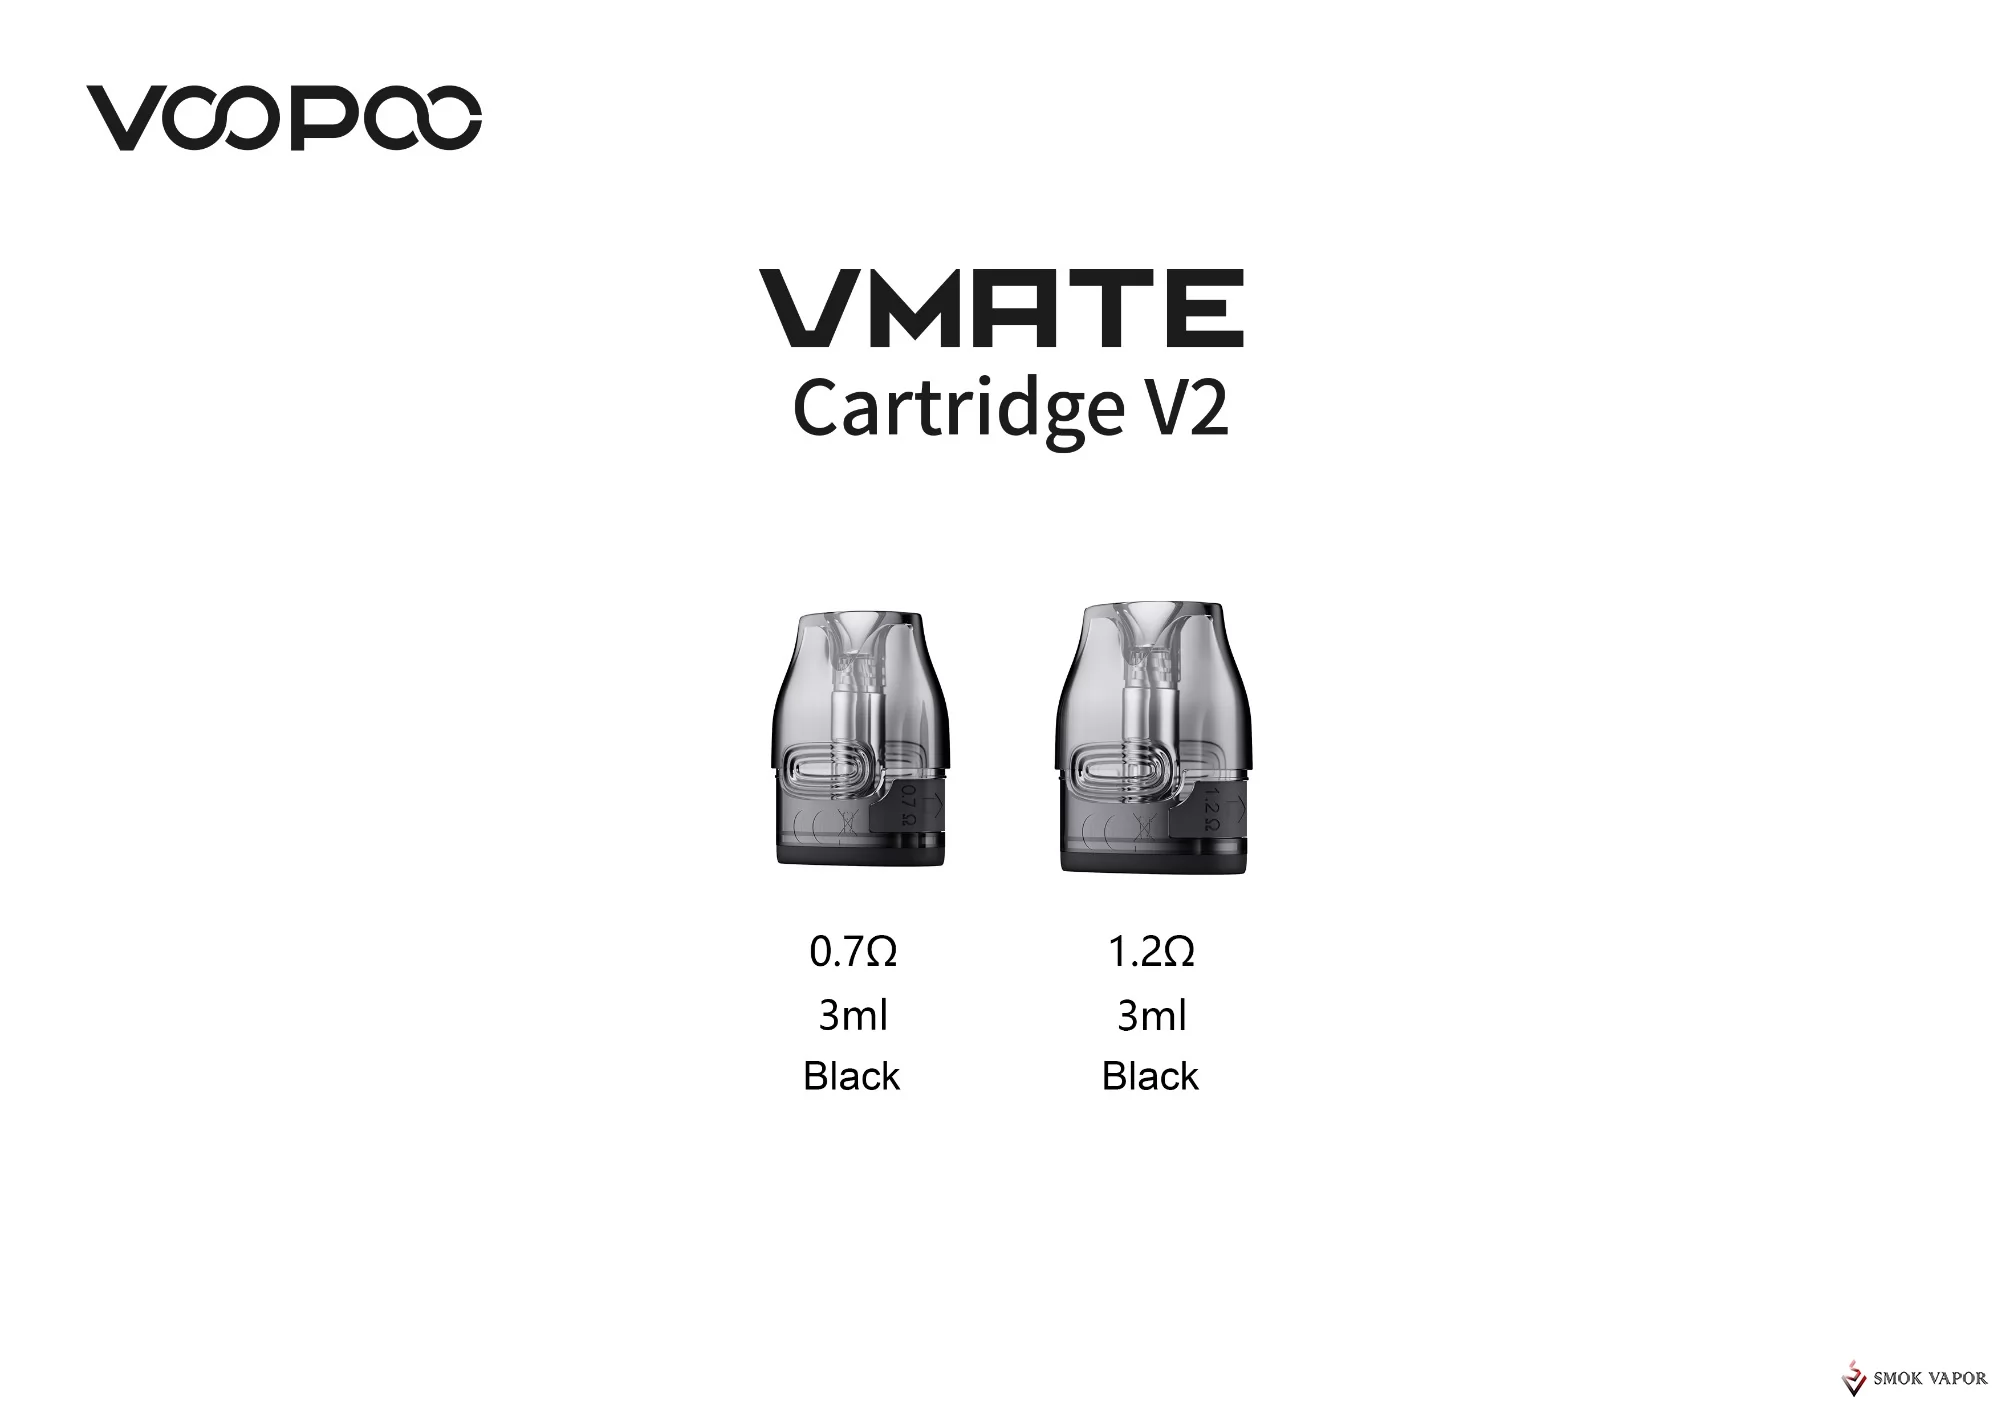 Voopoo Vmate Cartridge V2